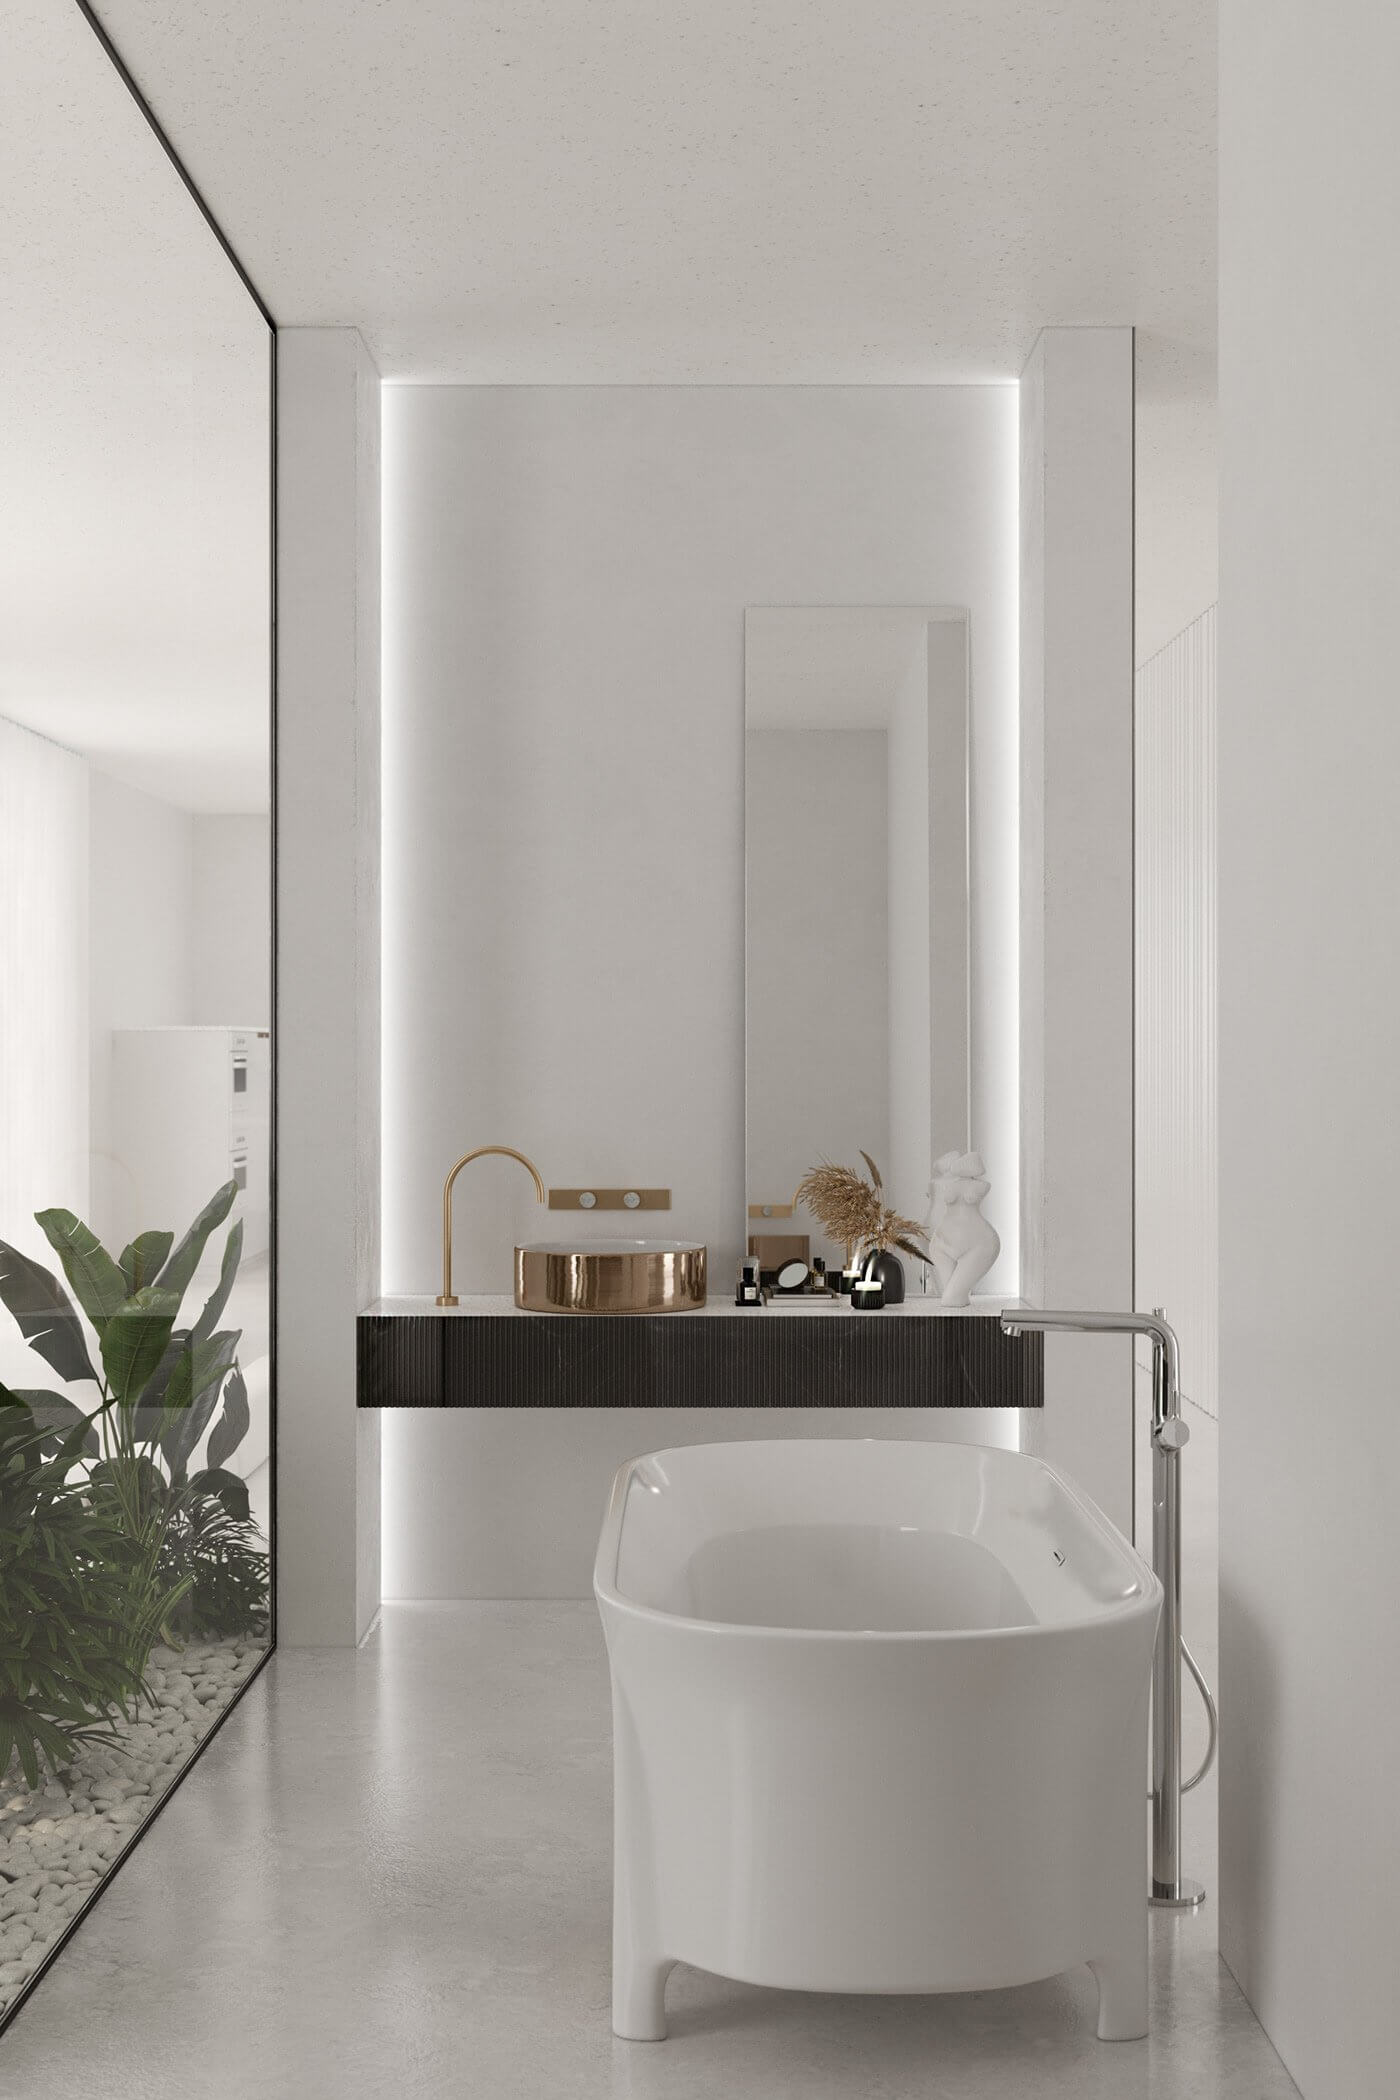 Simple white loft design bathroom - cgi visualization